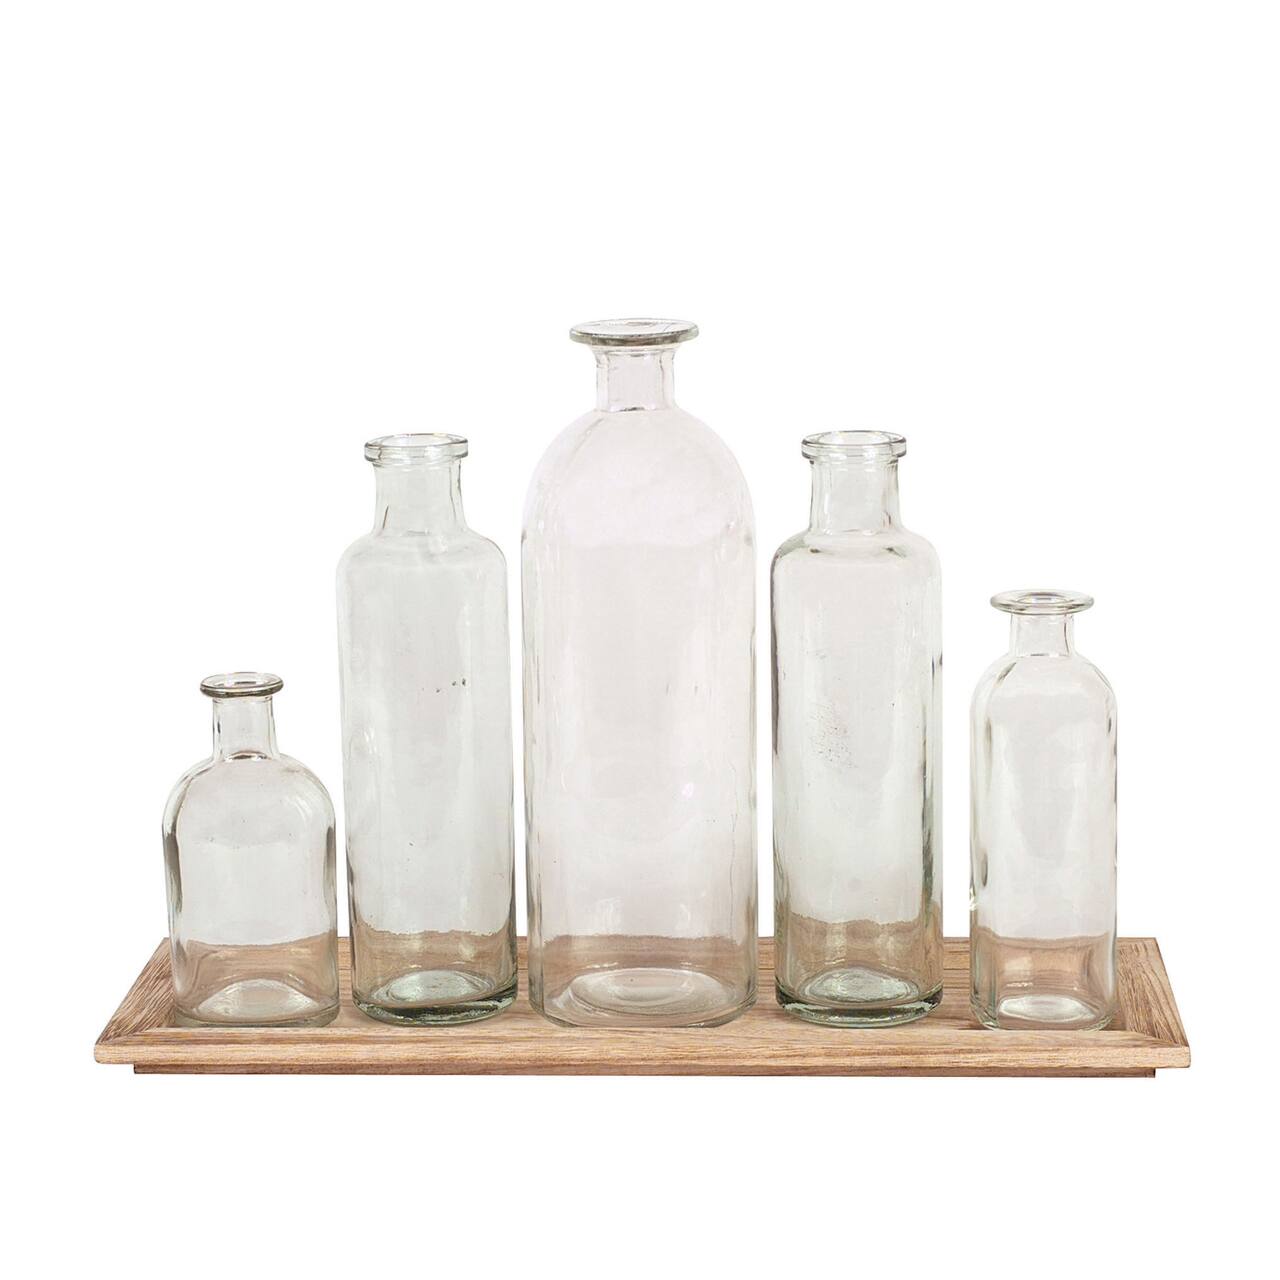 Vintage Bottle Vases on Wood Tray Combination Set